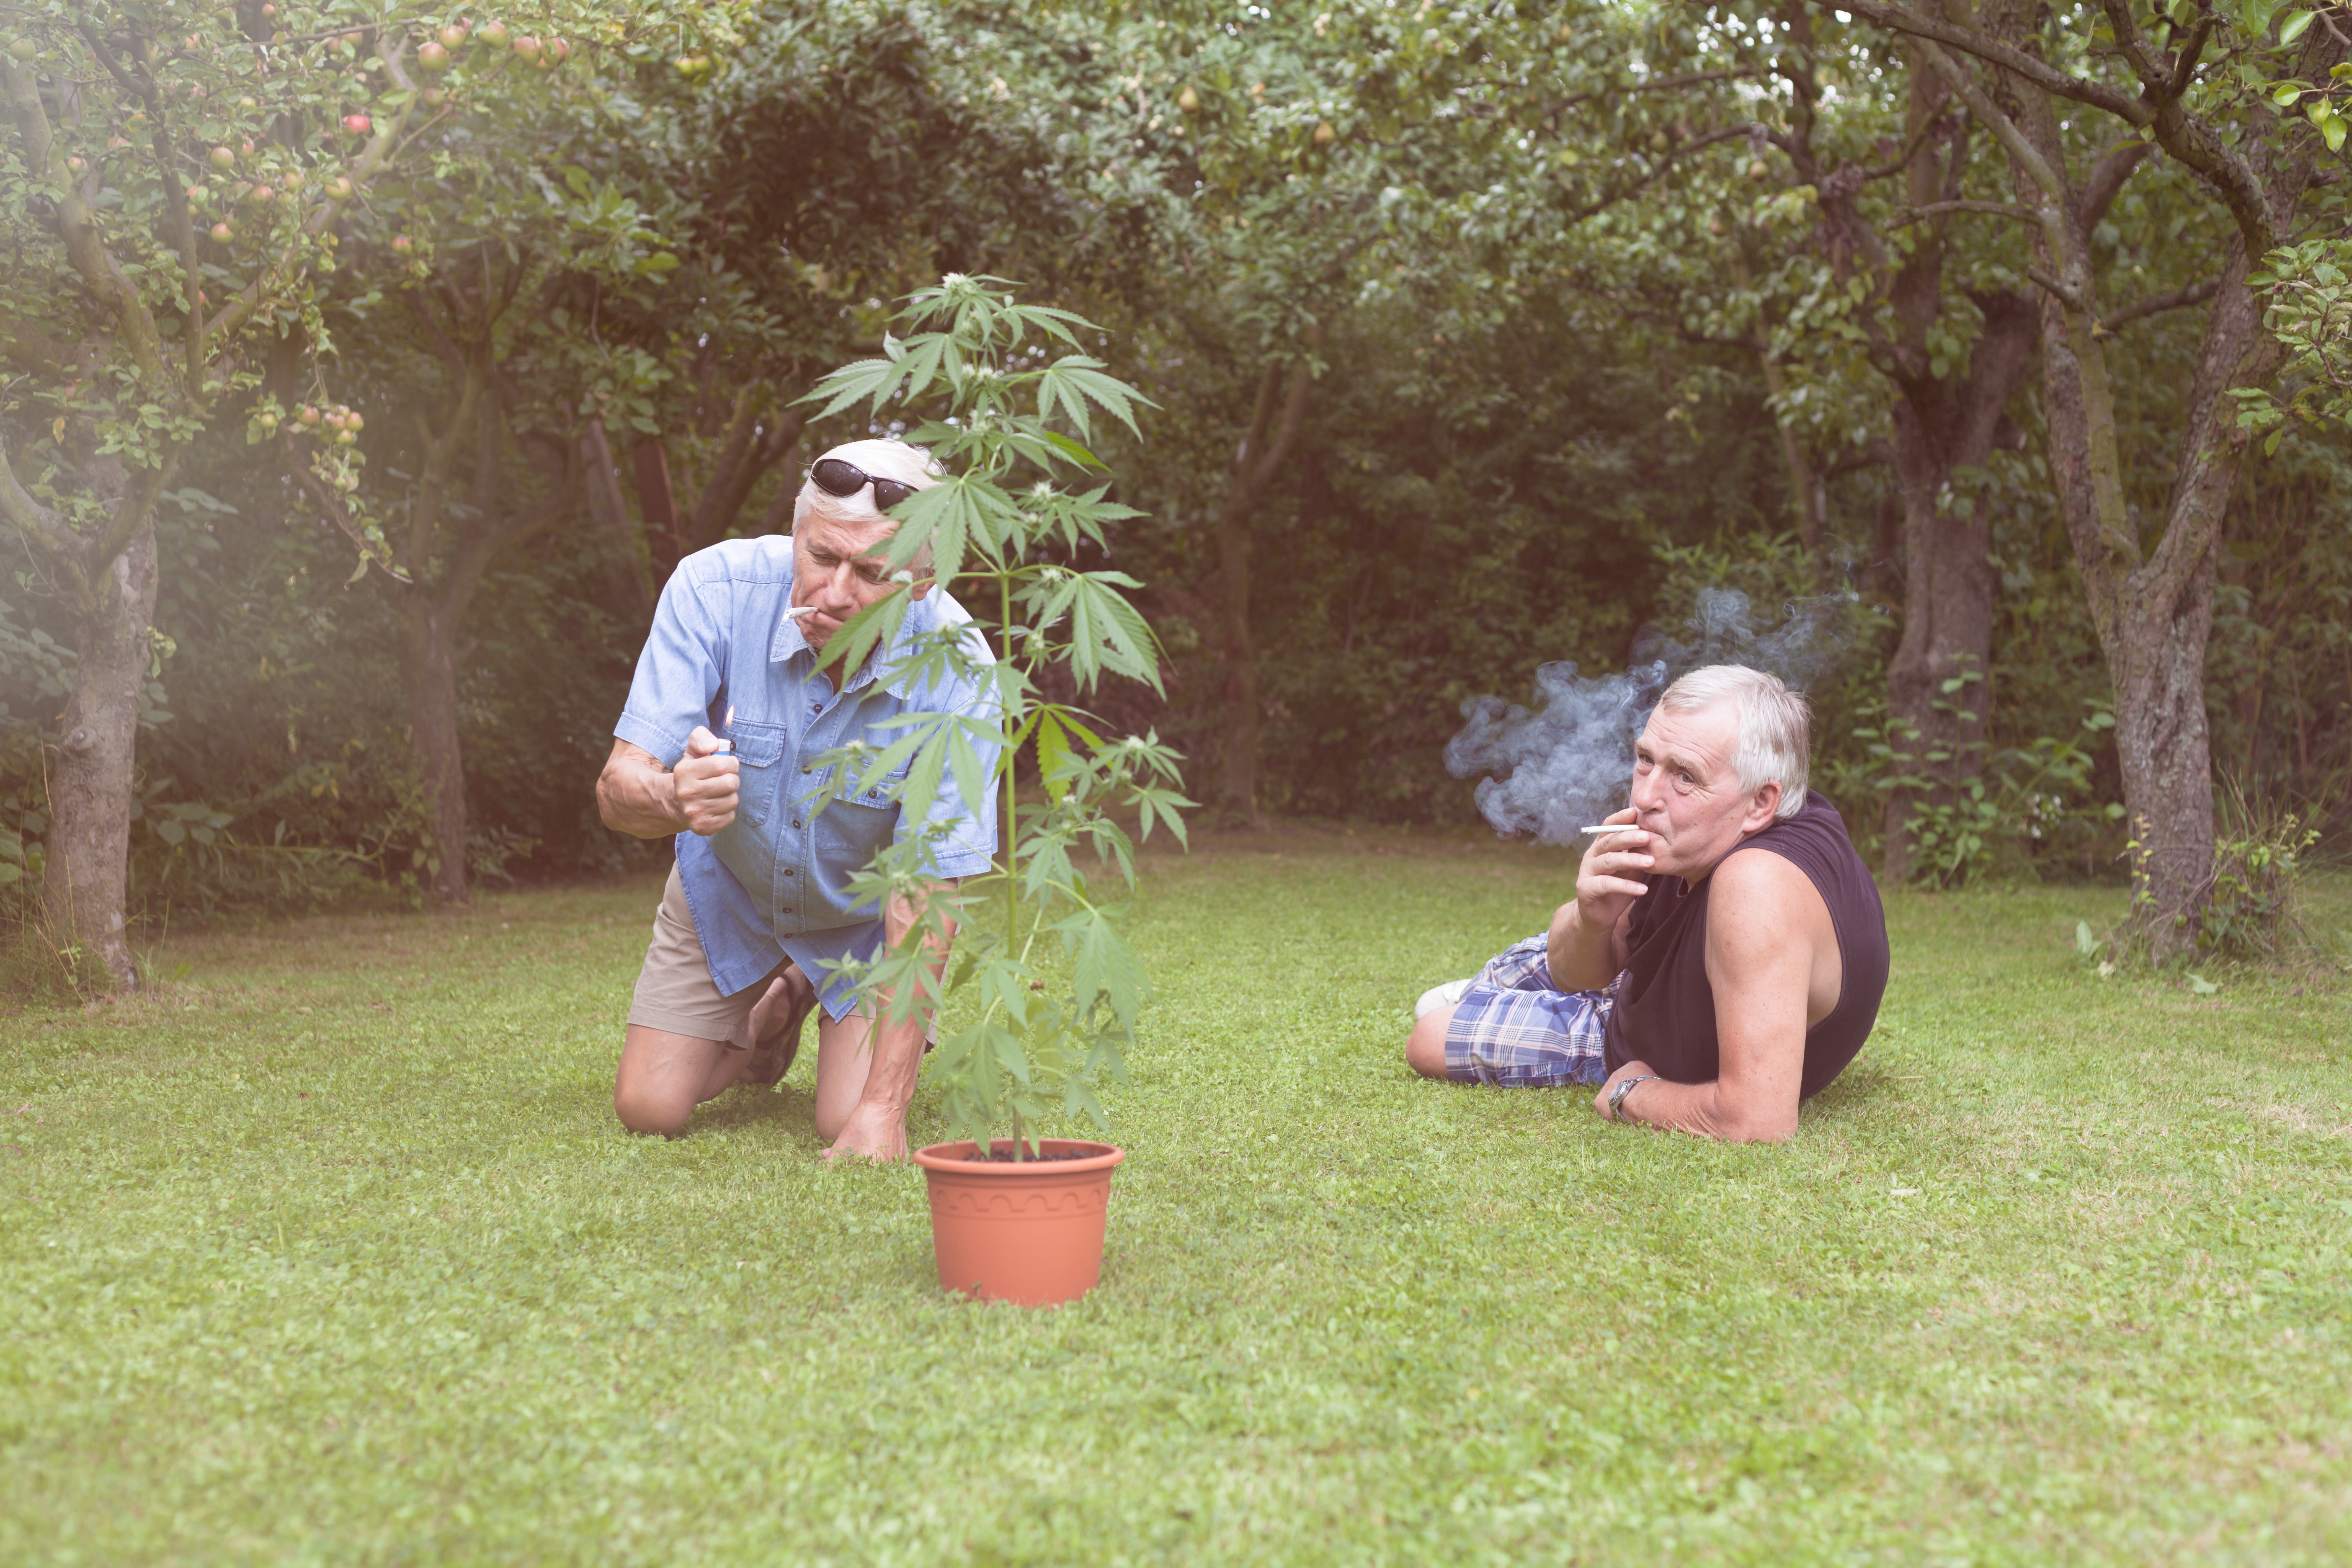 Two seniors sitting around cannabis plant smoking on grass